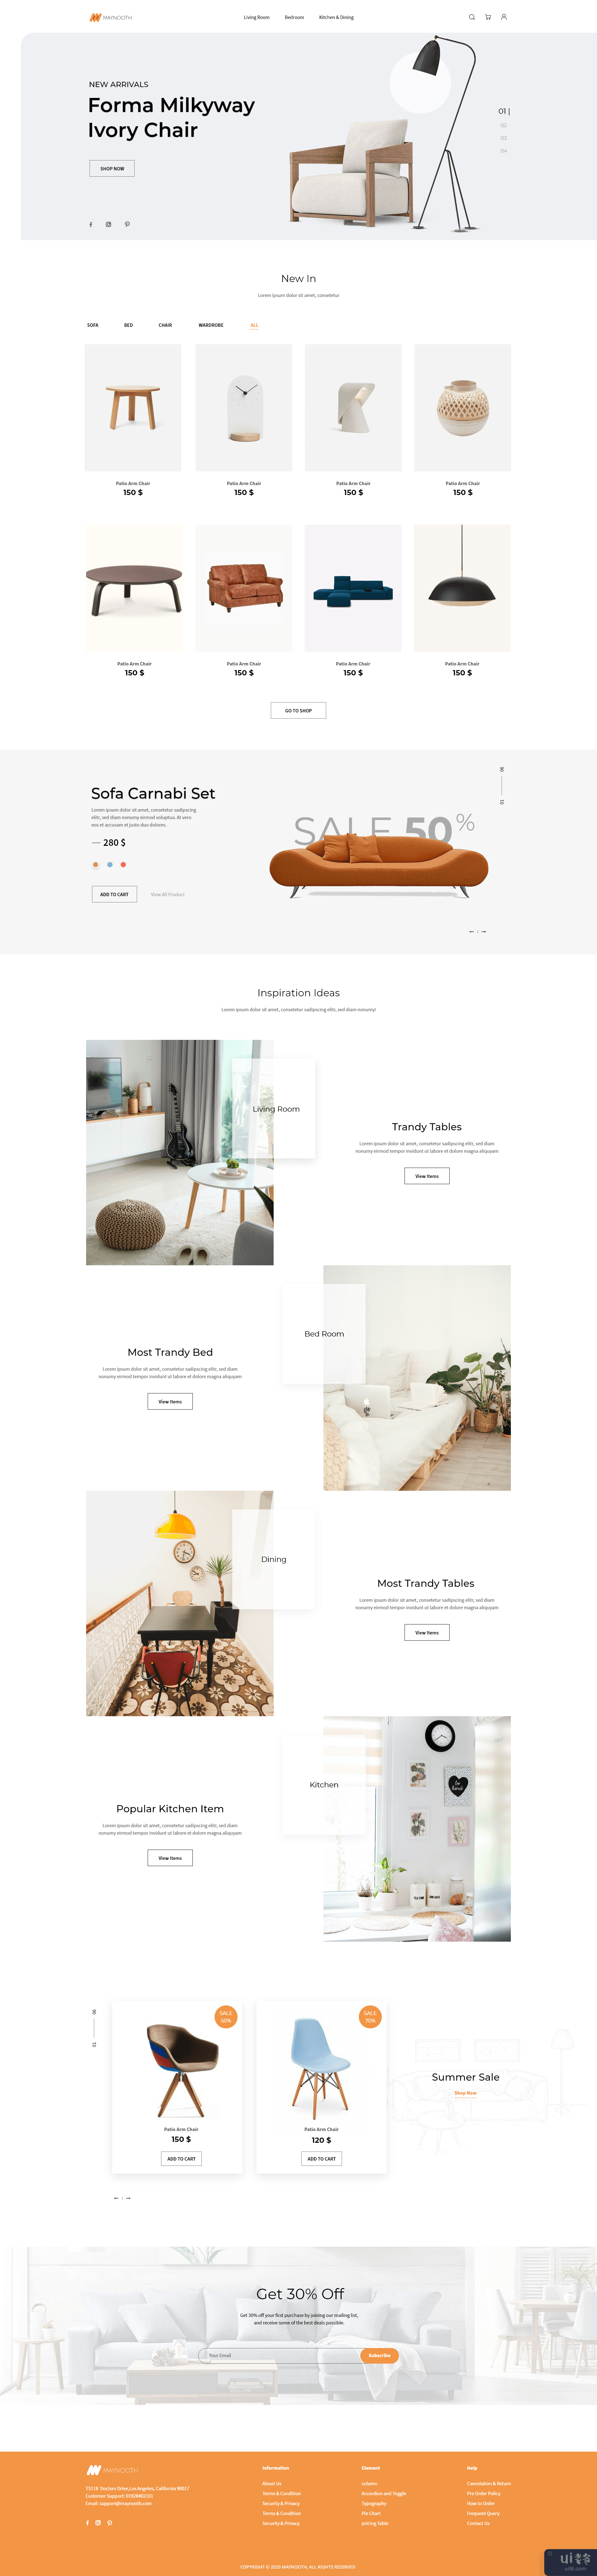 家具电商网站(Furniture E-Commerce website)插图